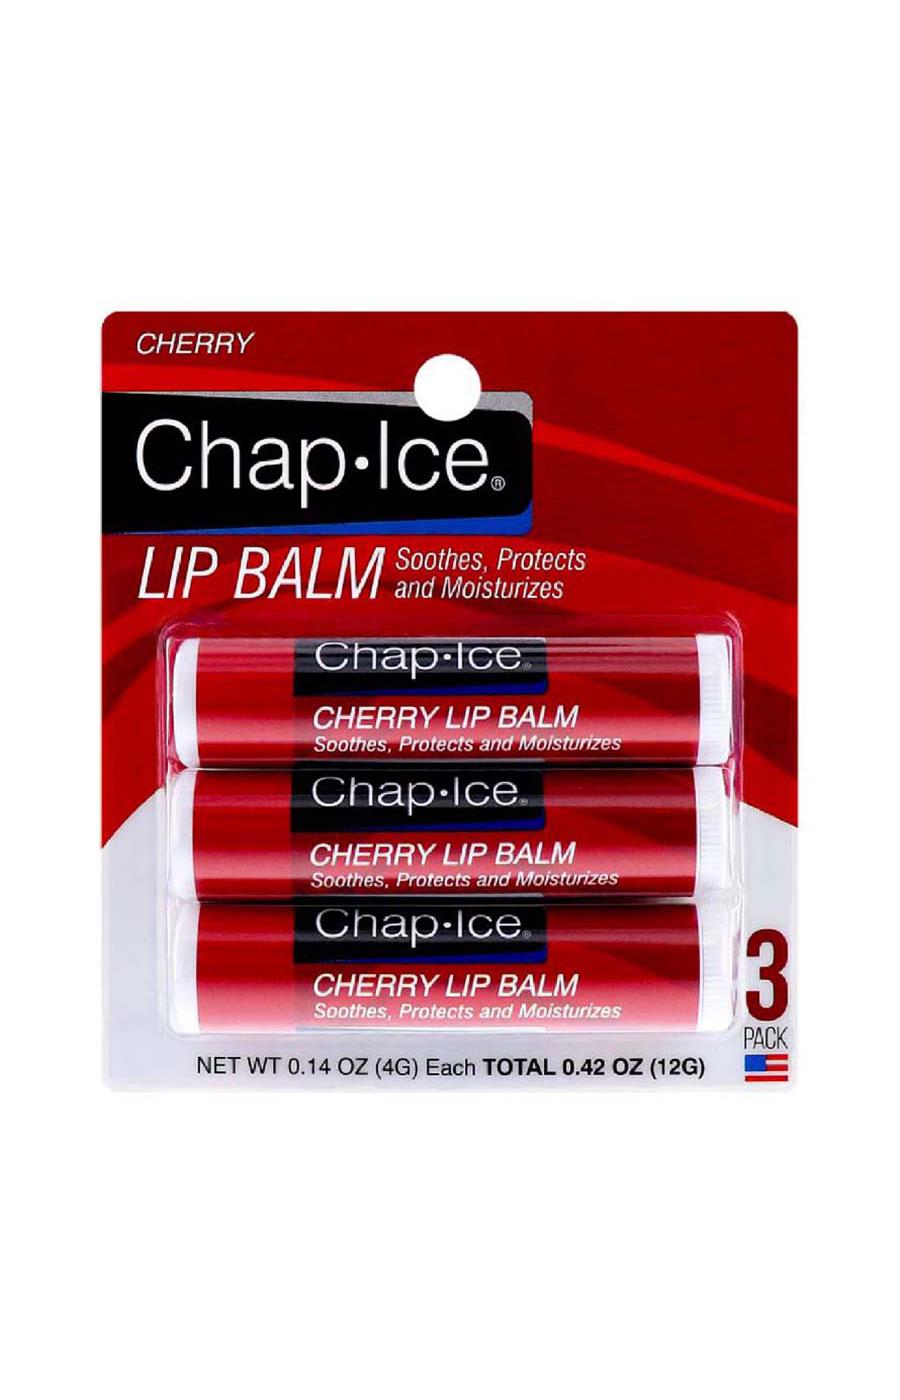 Chap-Ice Lip Balm - Cherry; image 1 of 2